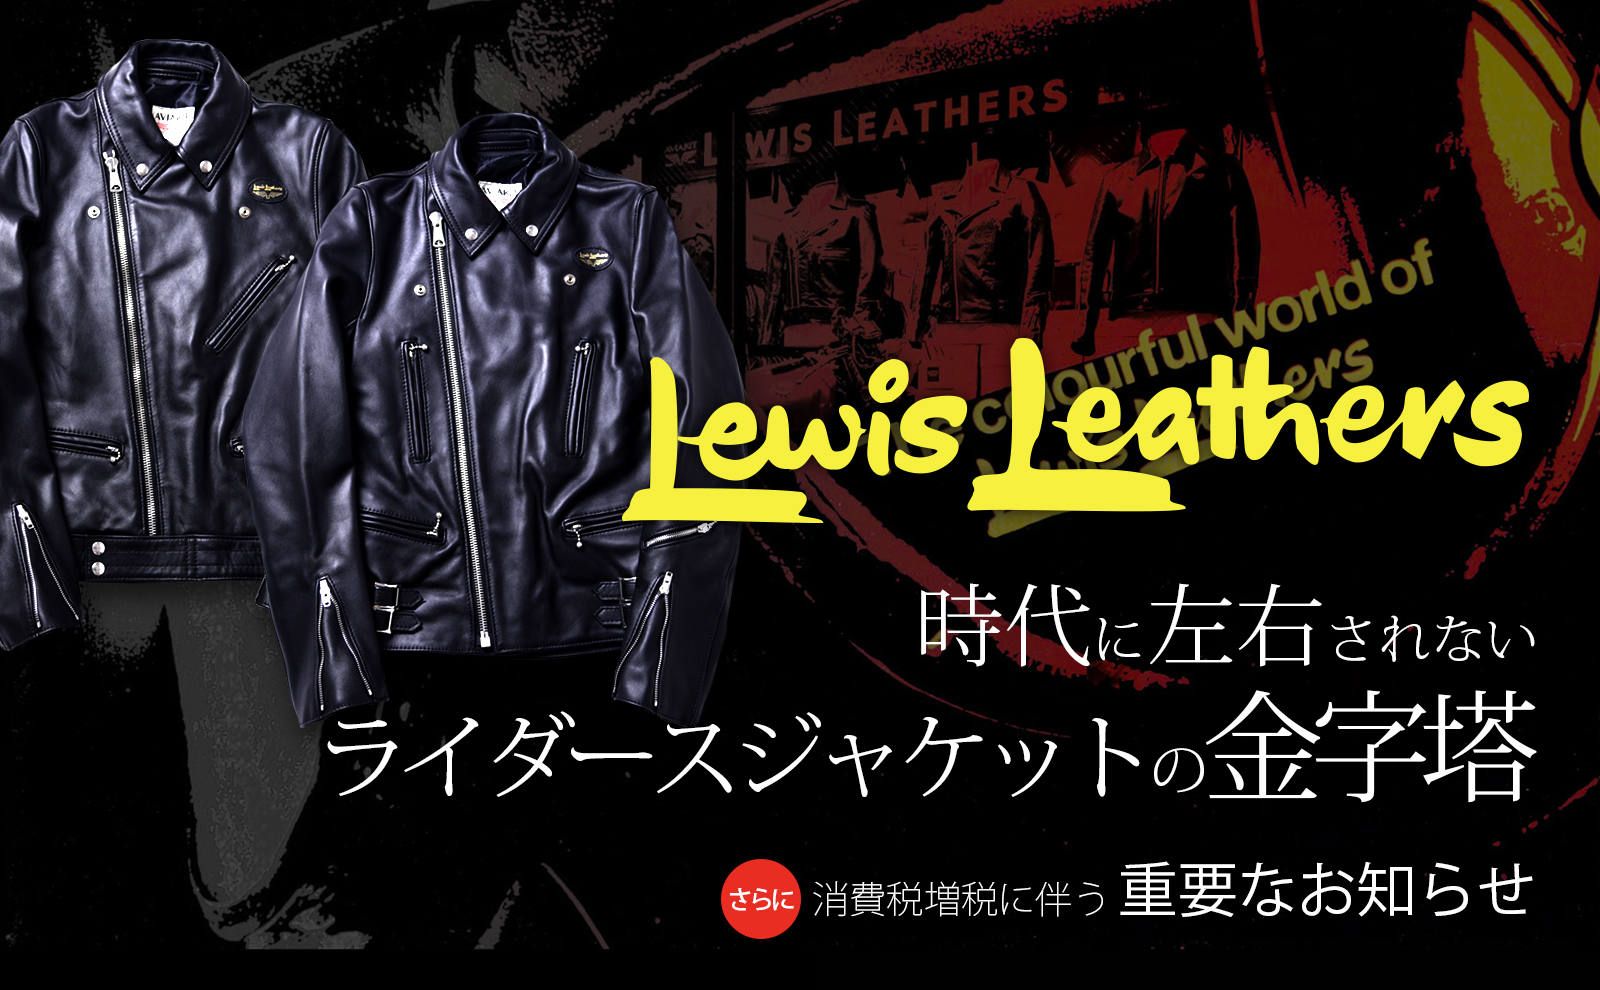 Lewis Leathers】 重要なのは「時代に左右されにくい」服選び | gossip